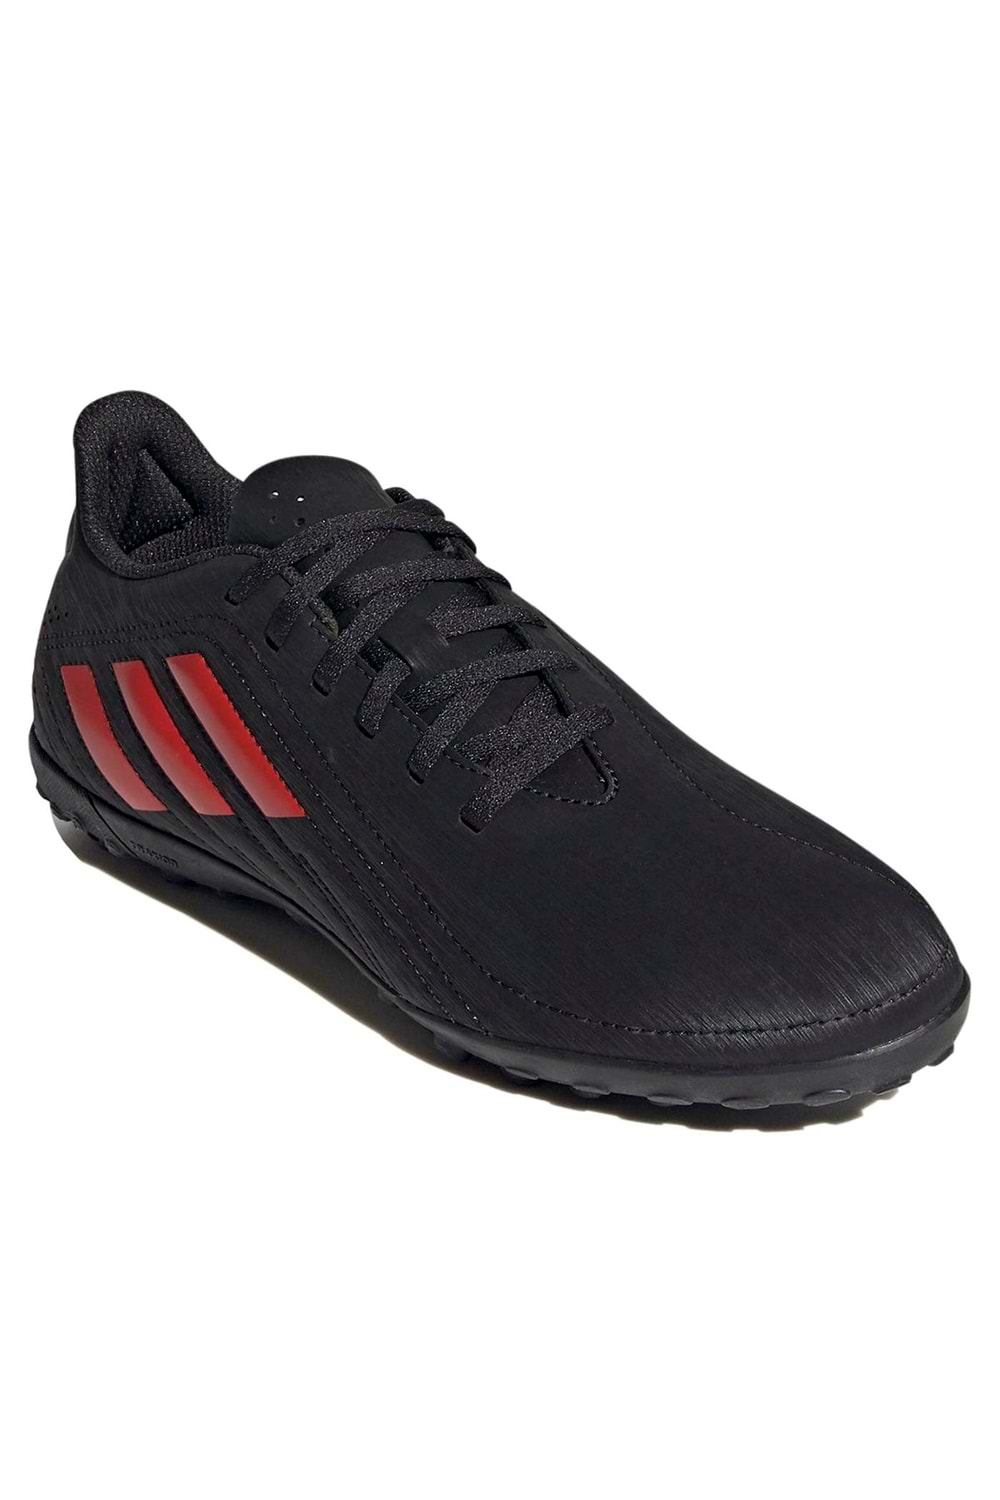 Adidas Deportivo TF Erkek Futbol Ayakkabısı FV7914